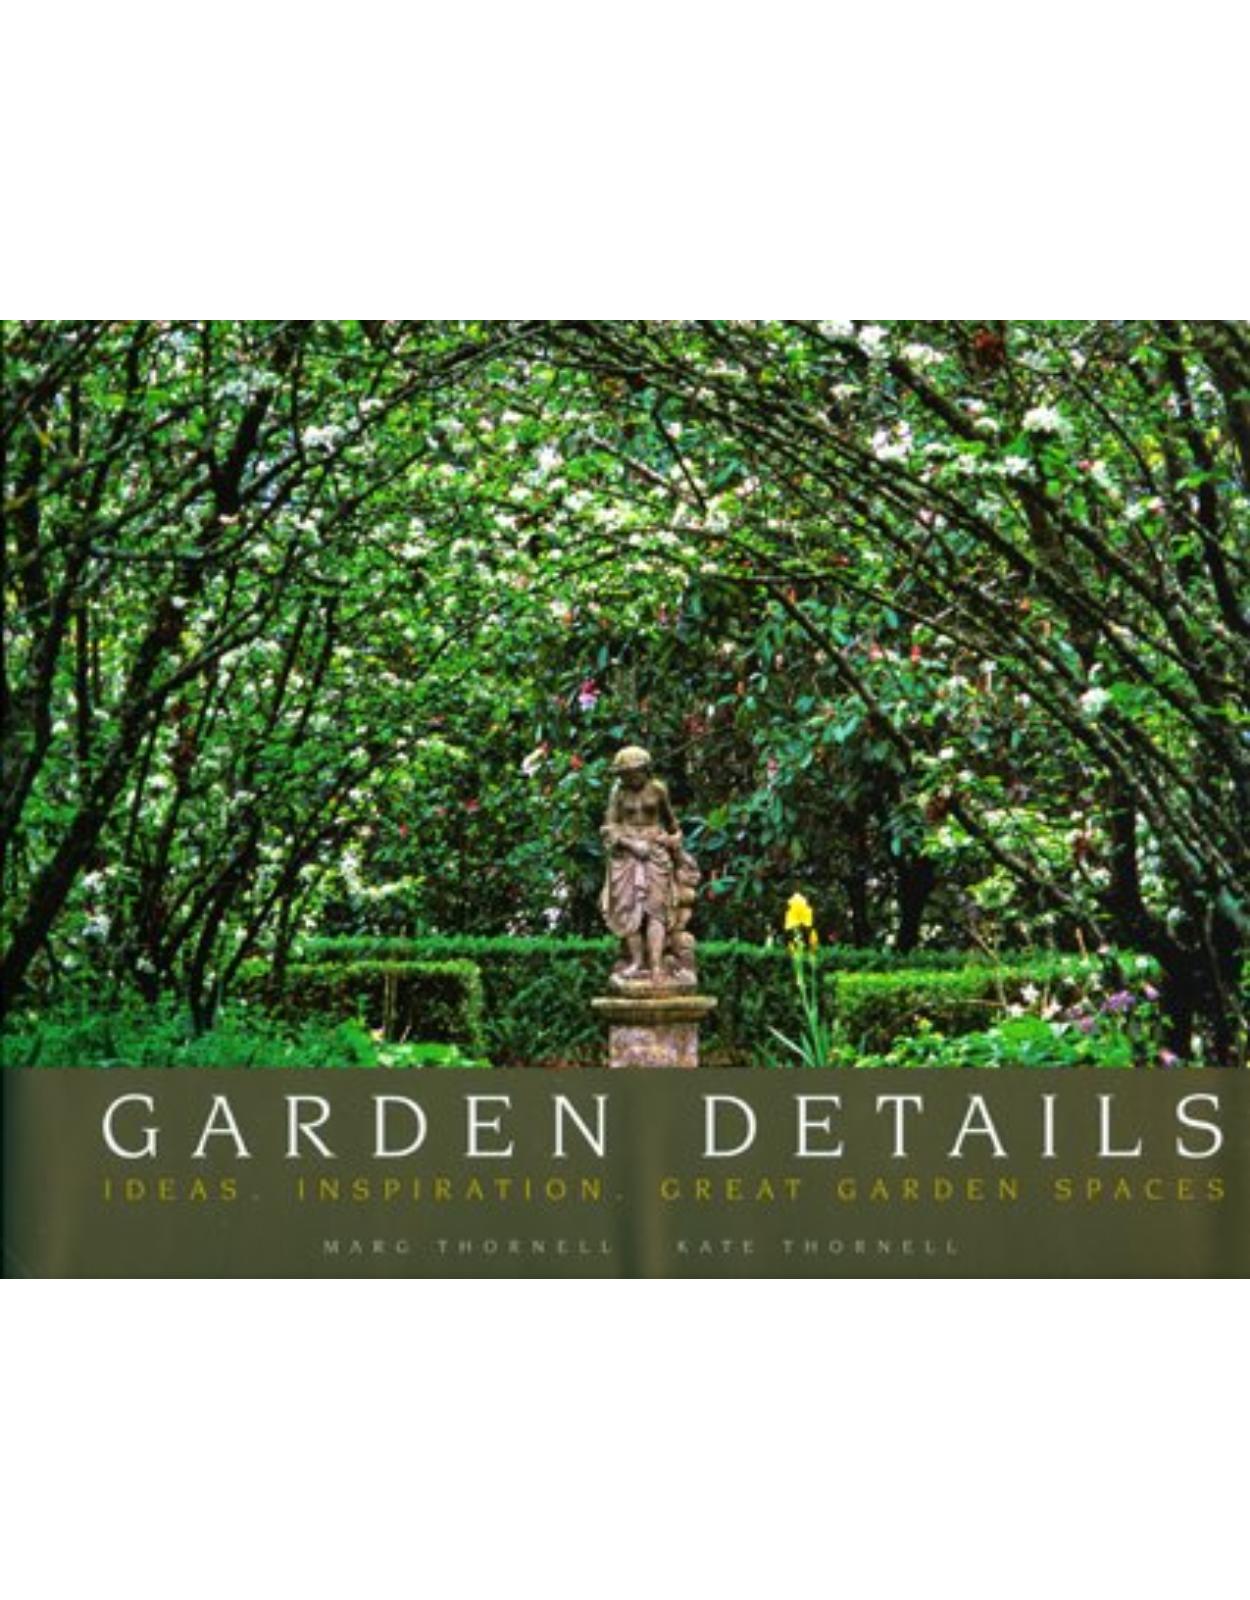 Garden Details: Ideas. Inspirations. Great Garden Spaces.